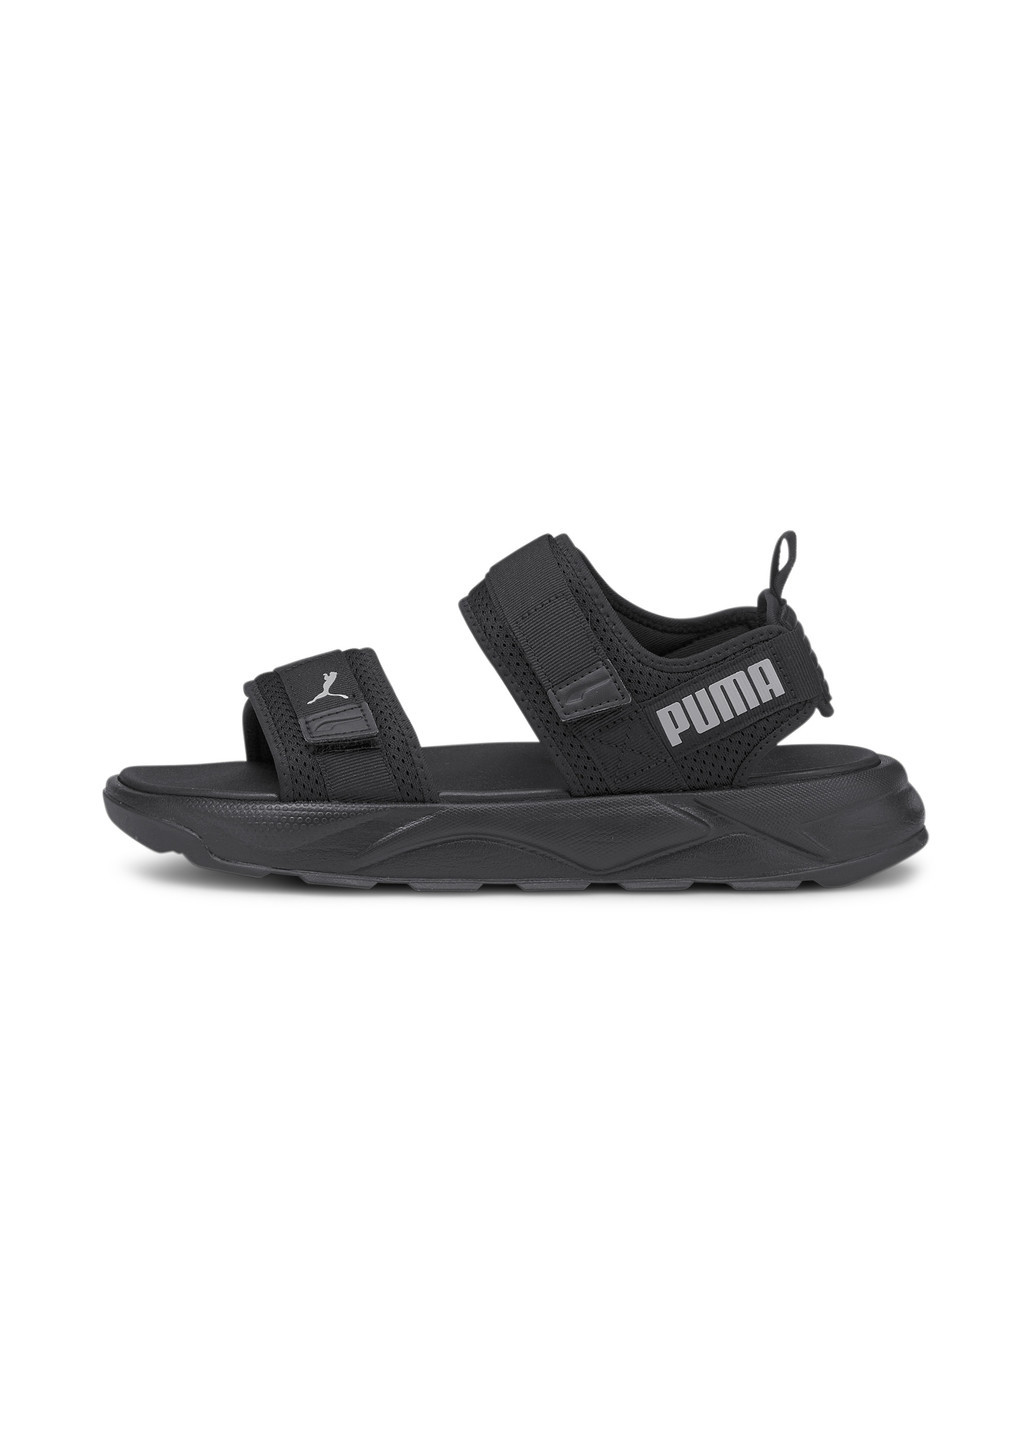 Сандалі RS Sandals Puma однотонна чорна спортивна